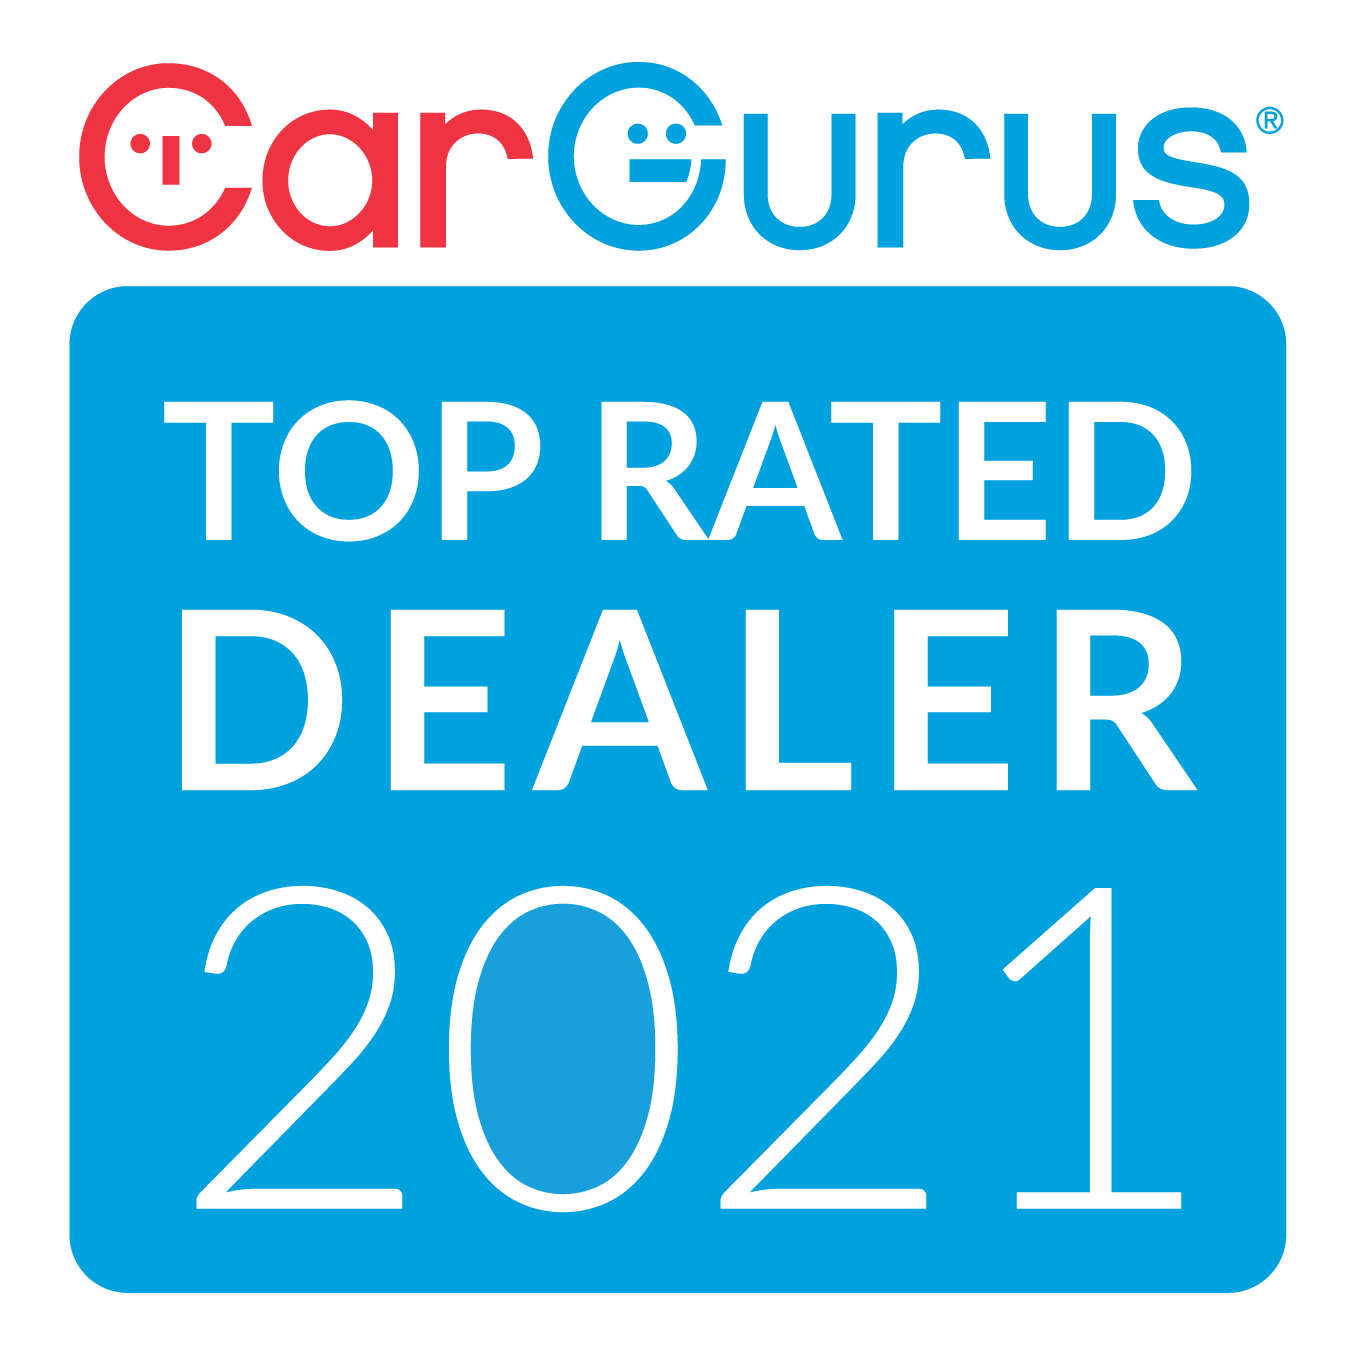 Carguru Top Rated Dealer 2021